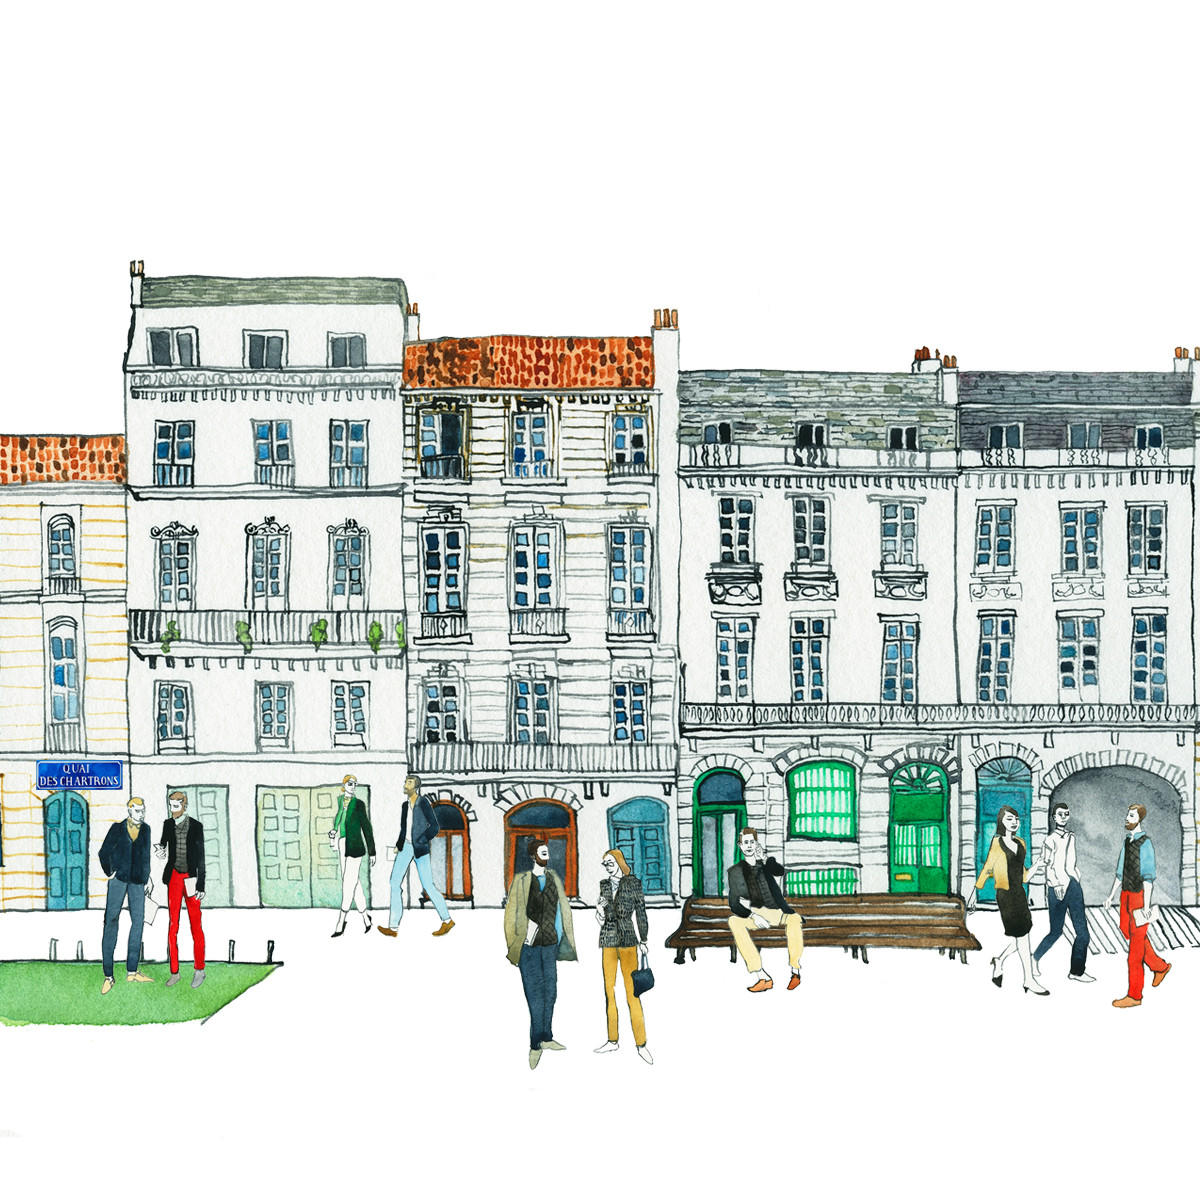 The Quai des Chartrons is the historic home of Bordeaux’s négociant trade. Illustration: Eleanor Crow